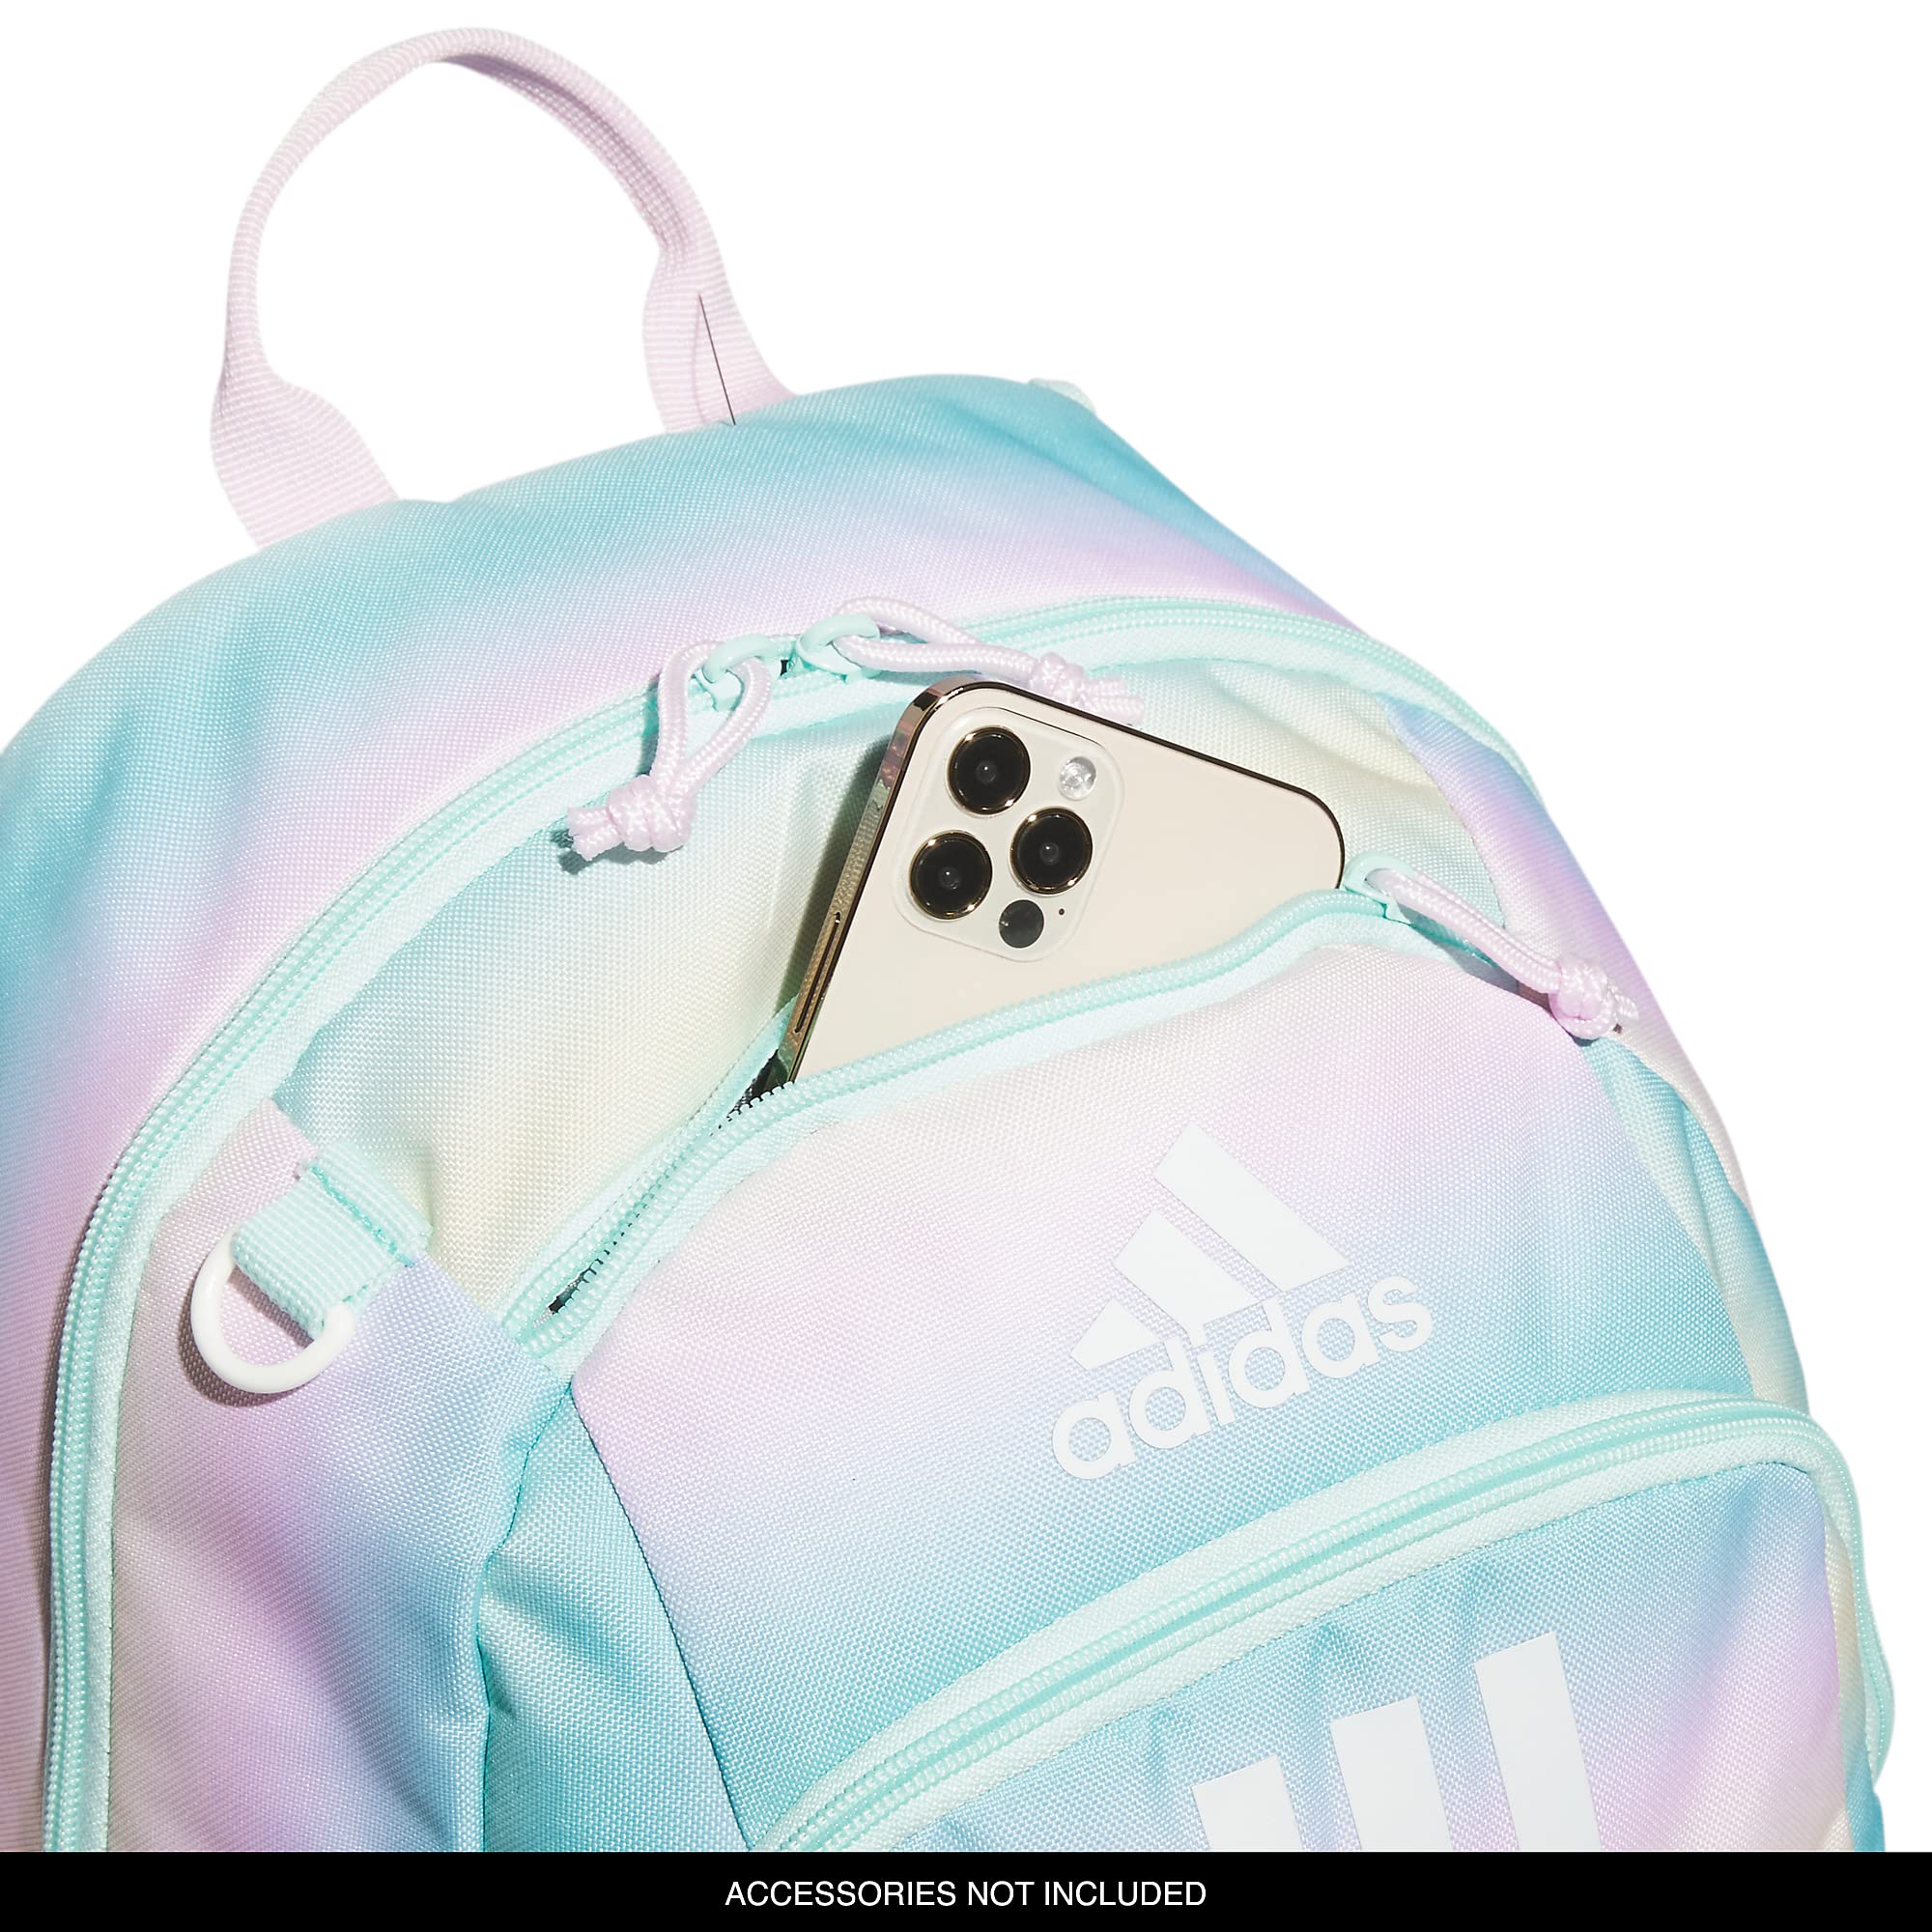 adidas Creator 2 Backpack, Gradient Flash Aqua/Onix Grey/White, One Size